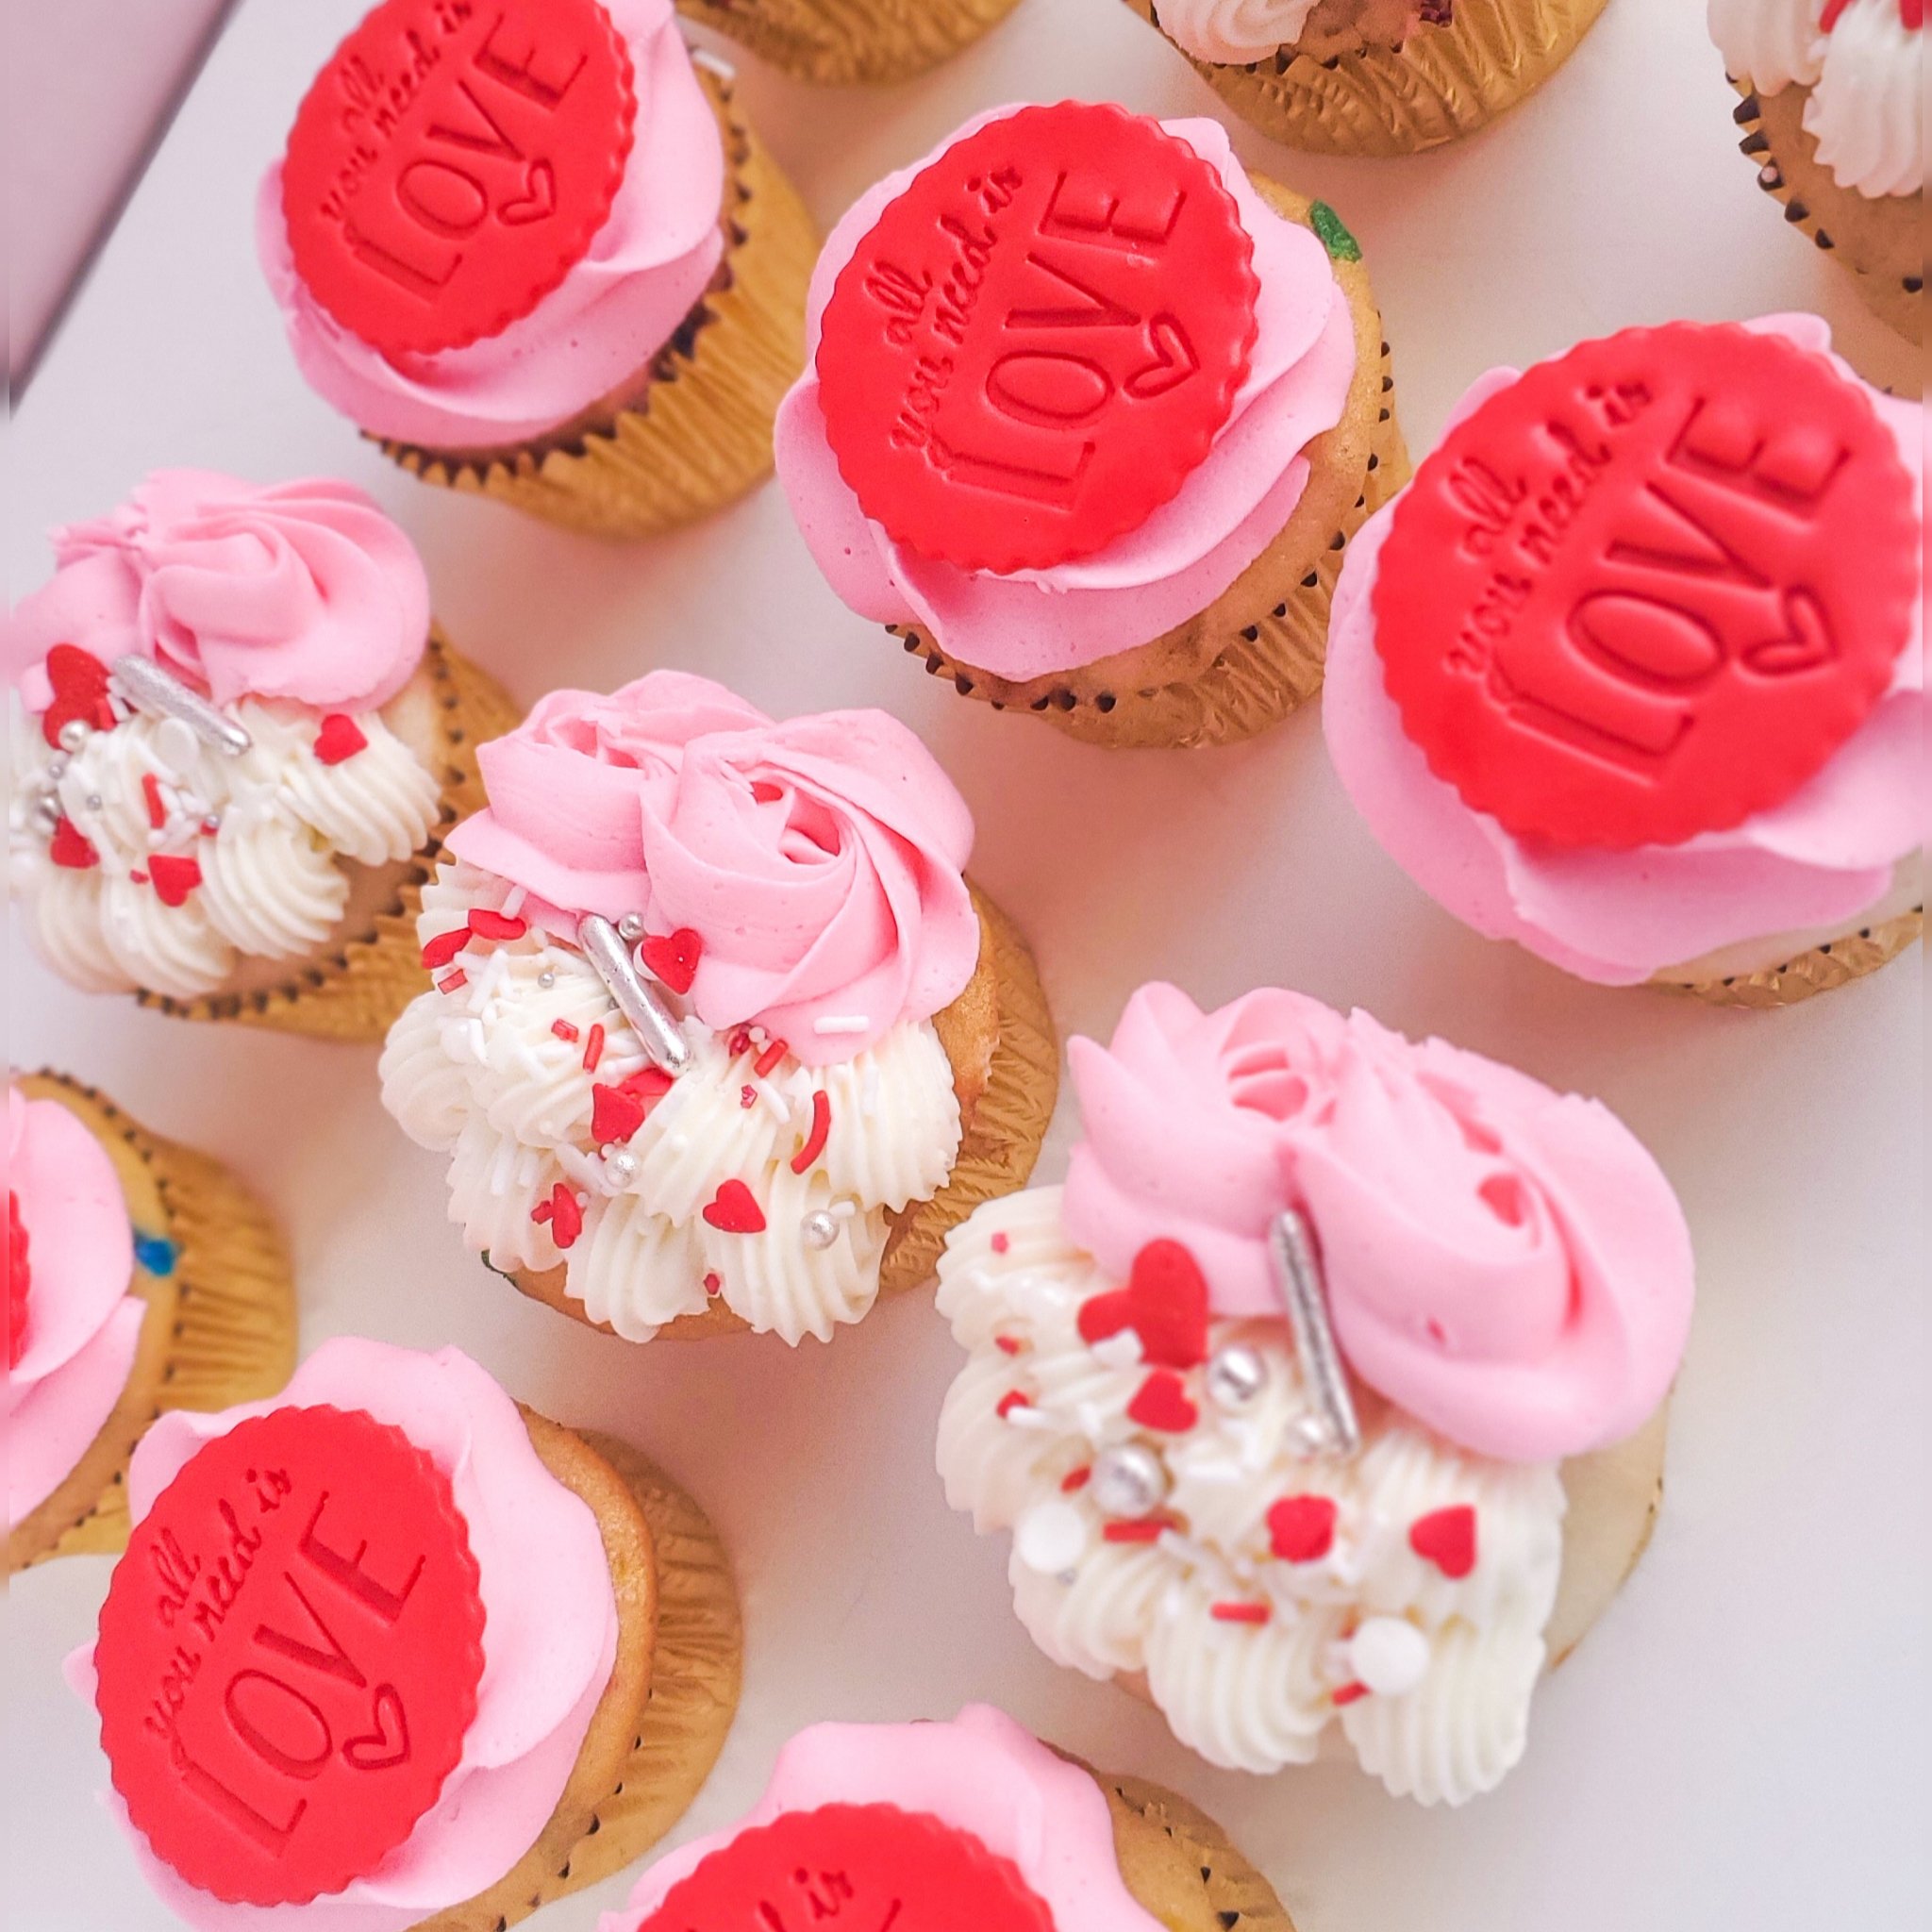 new valentines day cupcakes3.jpg